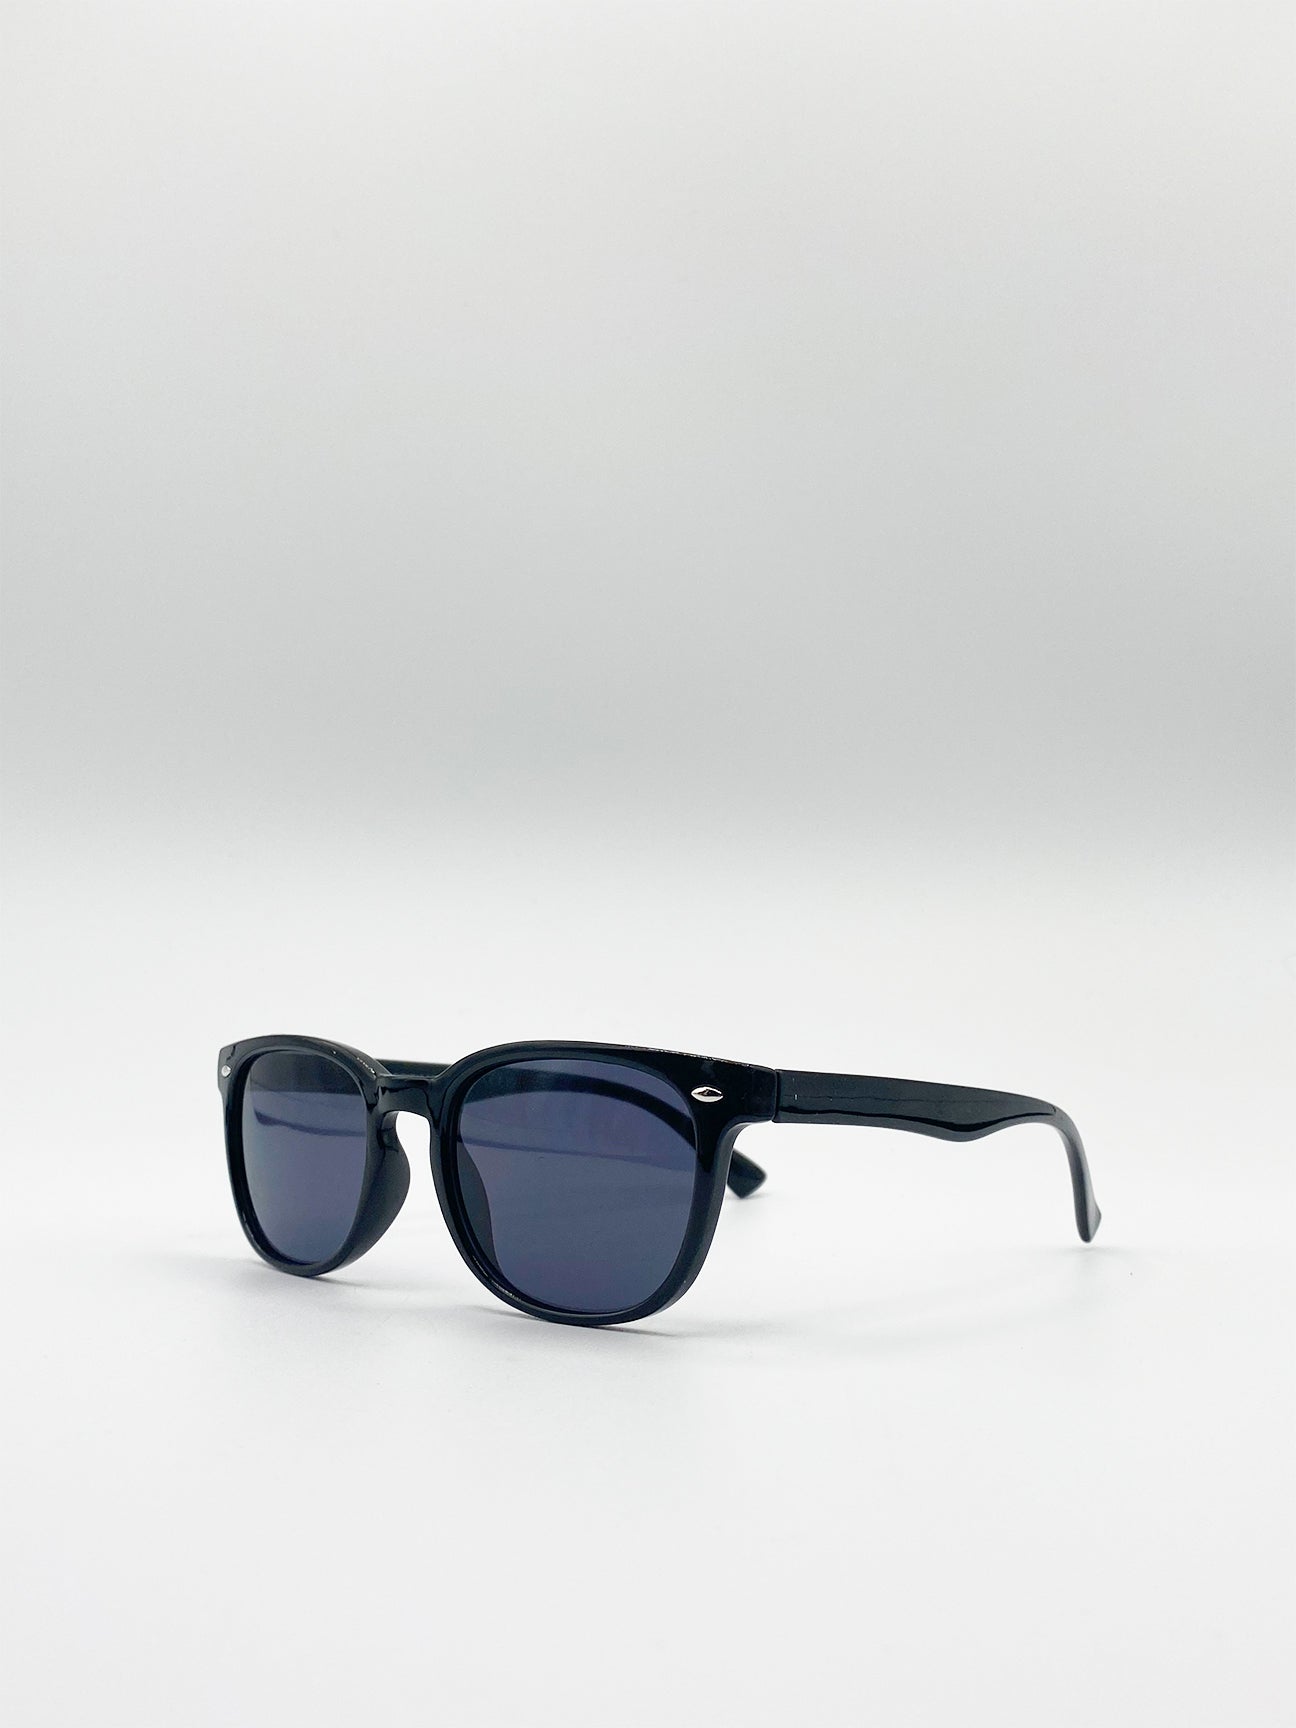 Black Smoke Lenses Classic Preppy Square Sunglasses With Key Hole Nosebridge